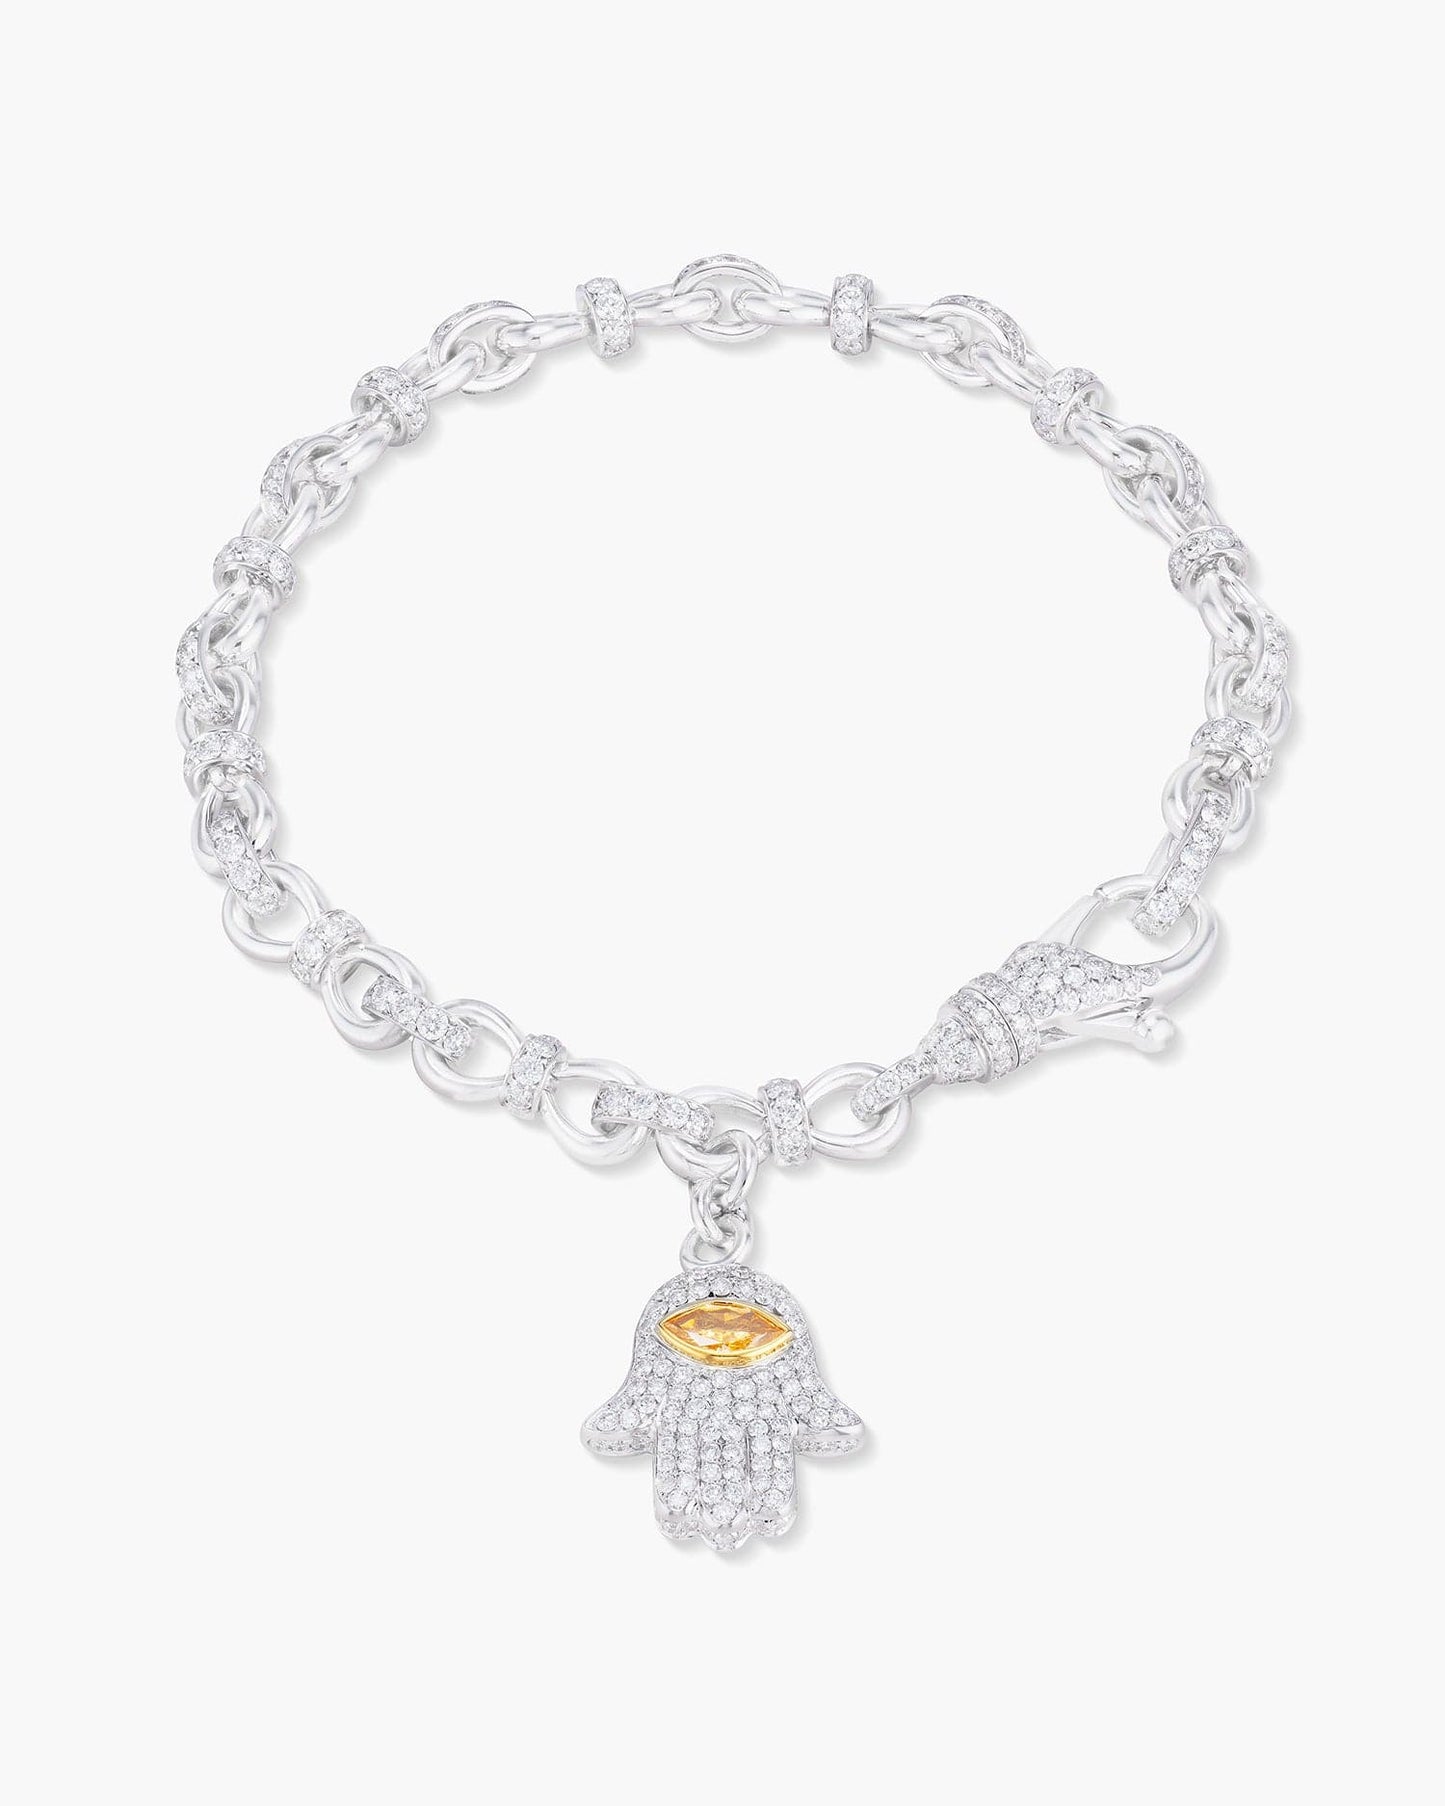 Marquise Shape Orange and White Diamond Charm Bracelet with Hamsa Charm